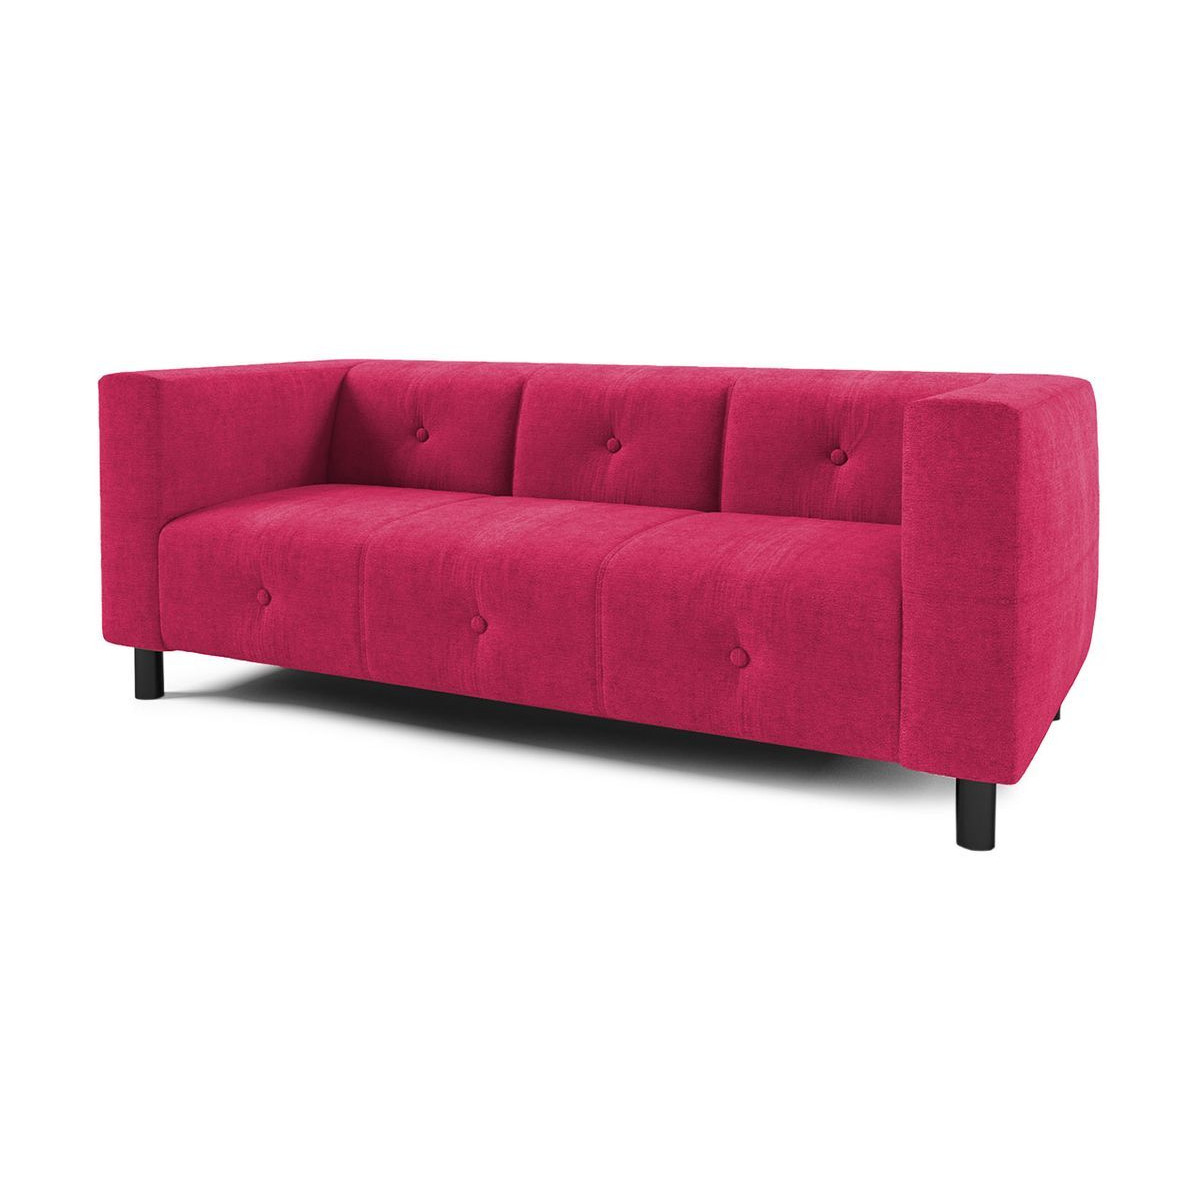 Fripp 3 Seater Sofa, pink - image 1